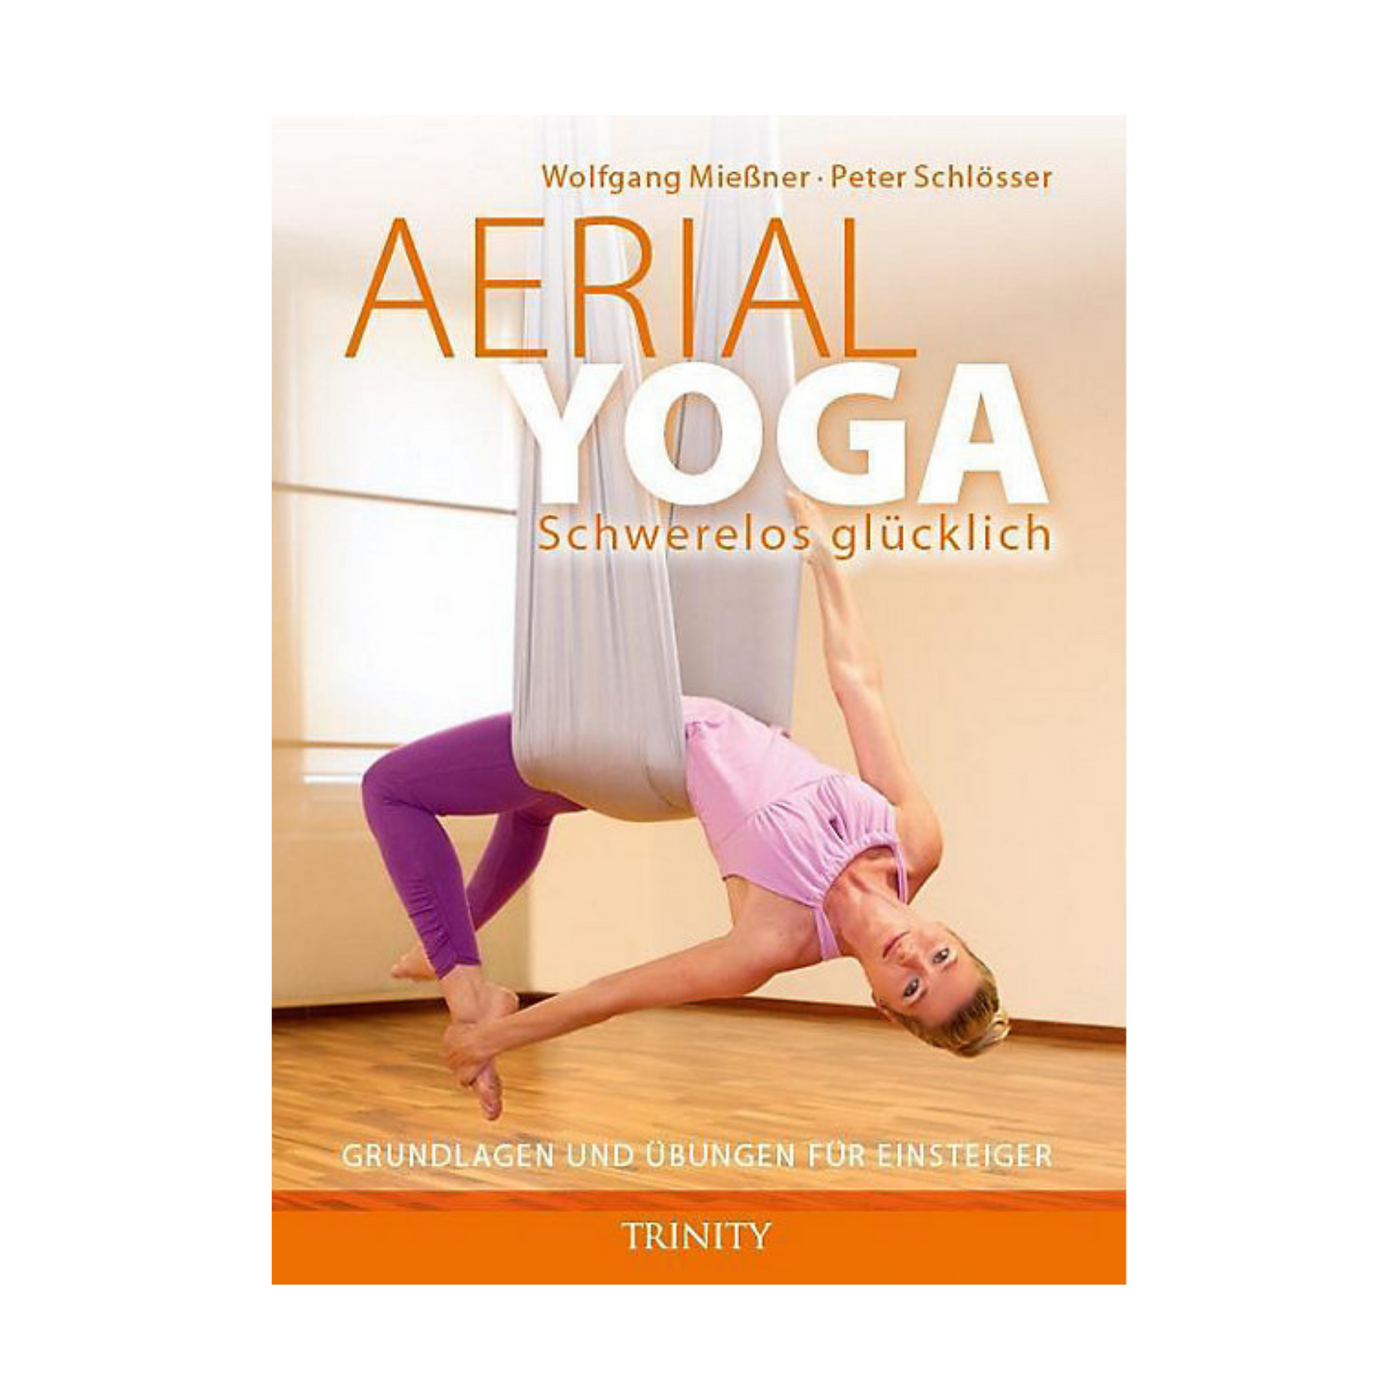 Aerial Yoga Book - Schwerelos Glücklich